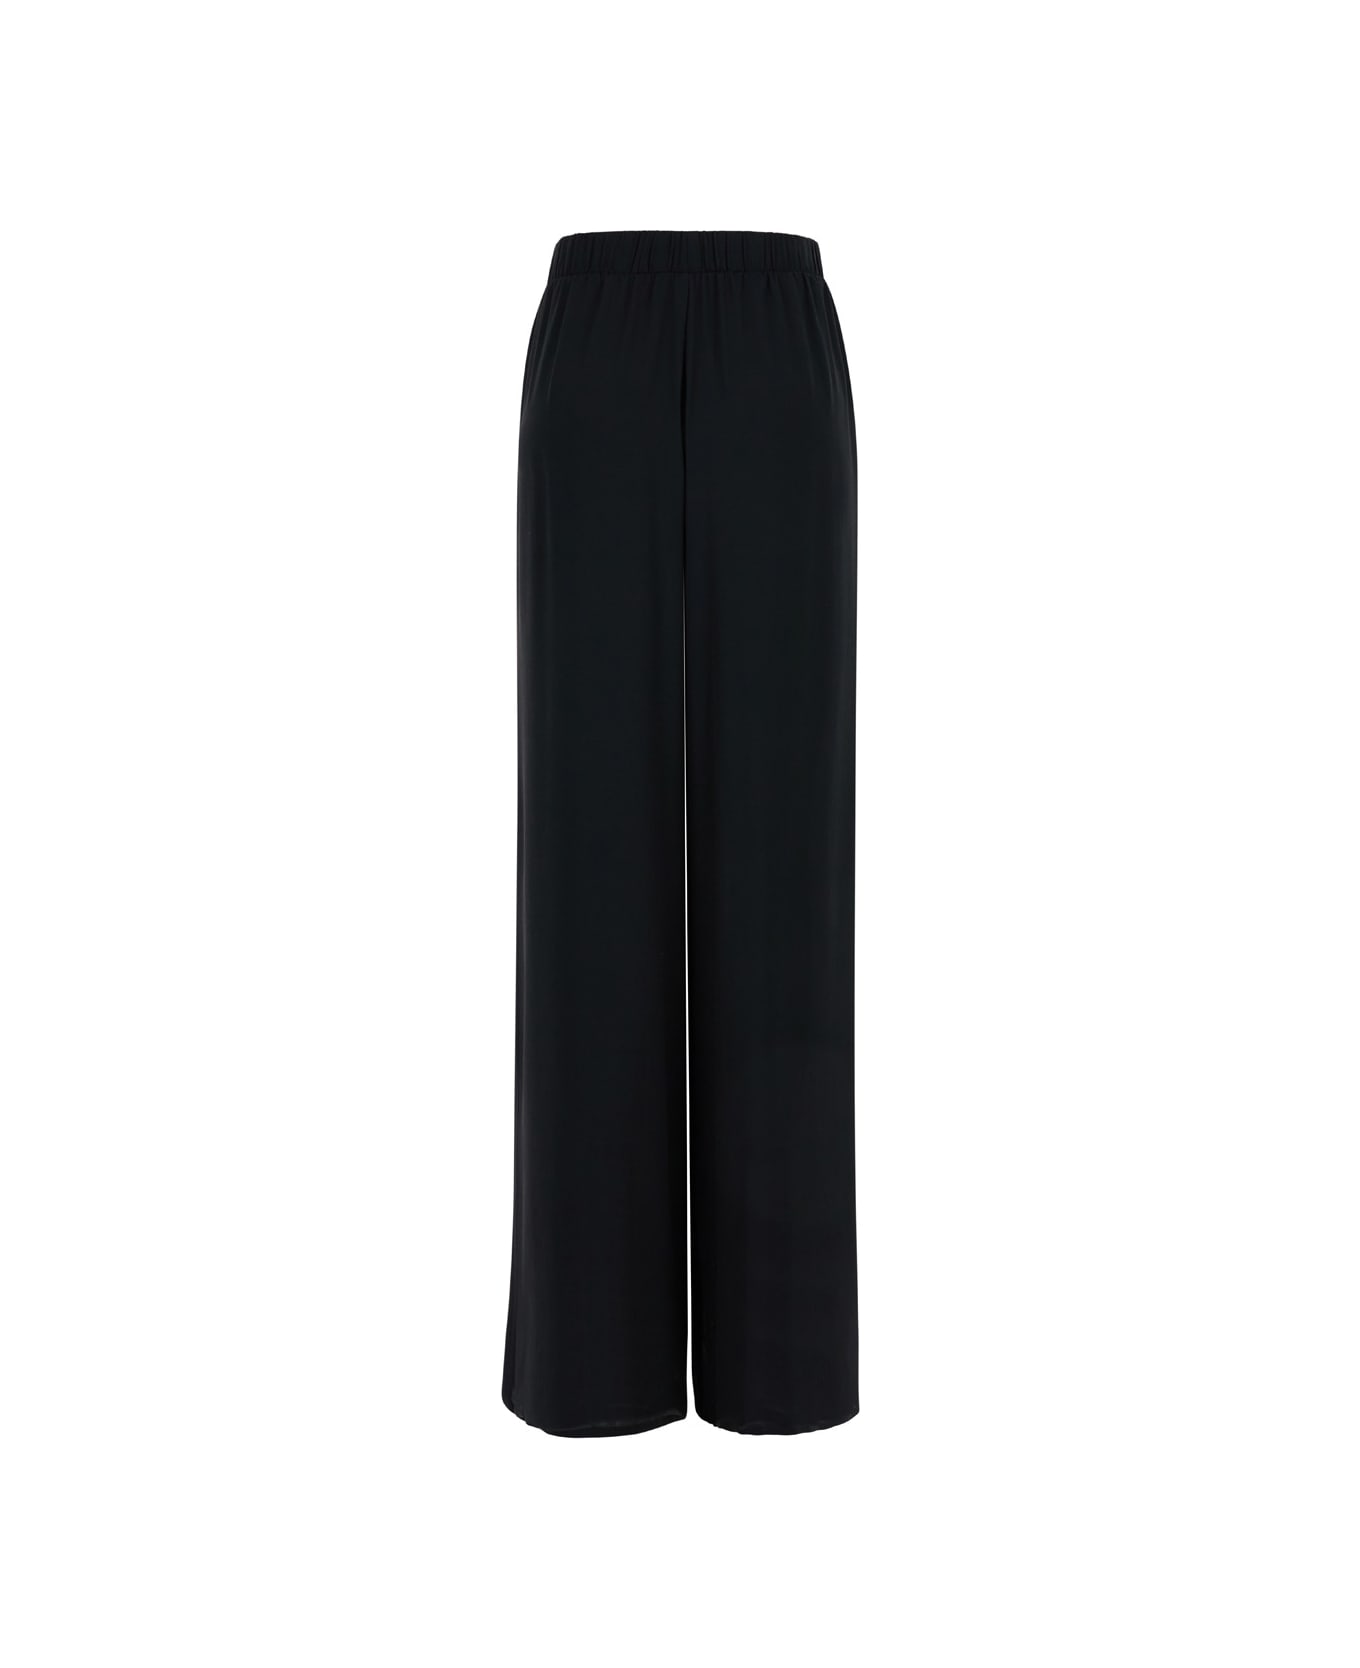 Federica Tosi Black Trousers With Elastic Waistband In Silk Blend Woman - Black ボトムス